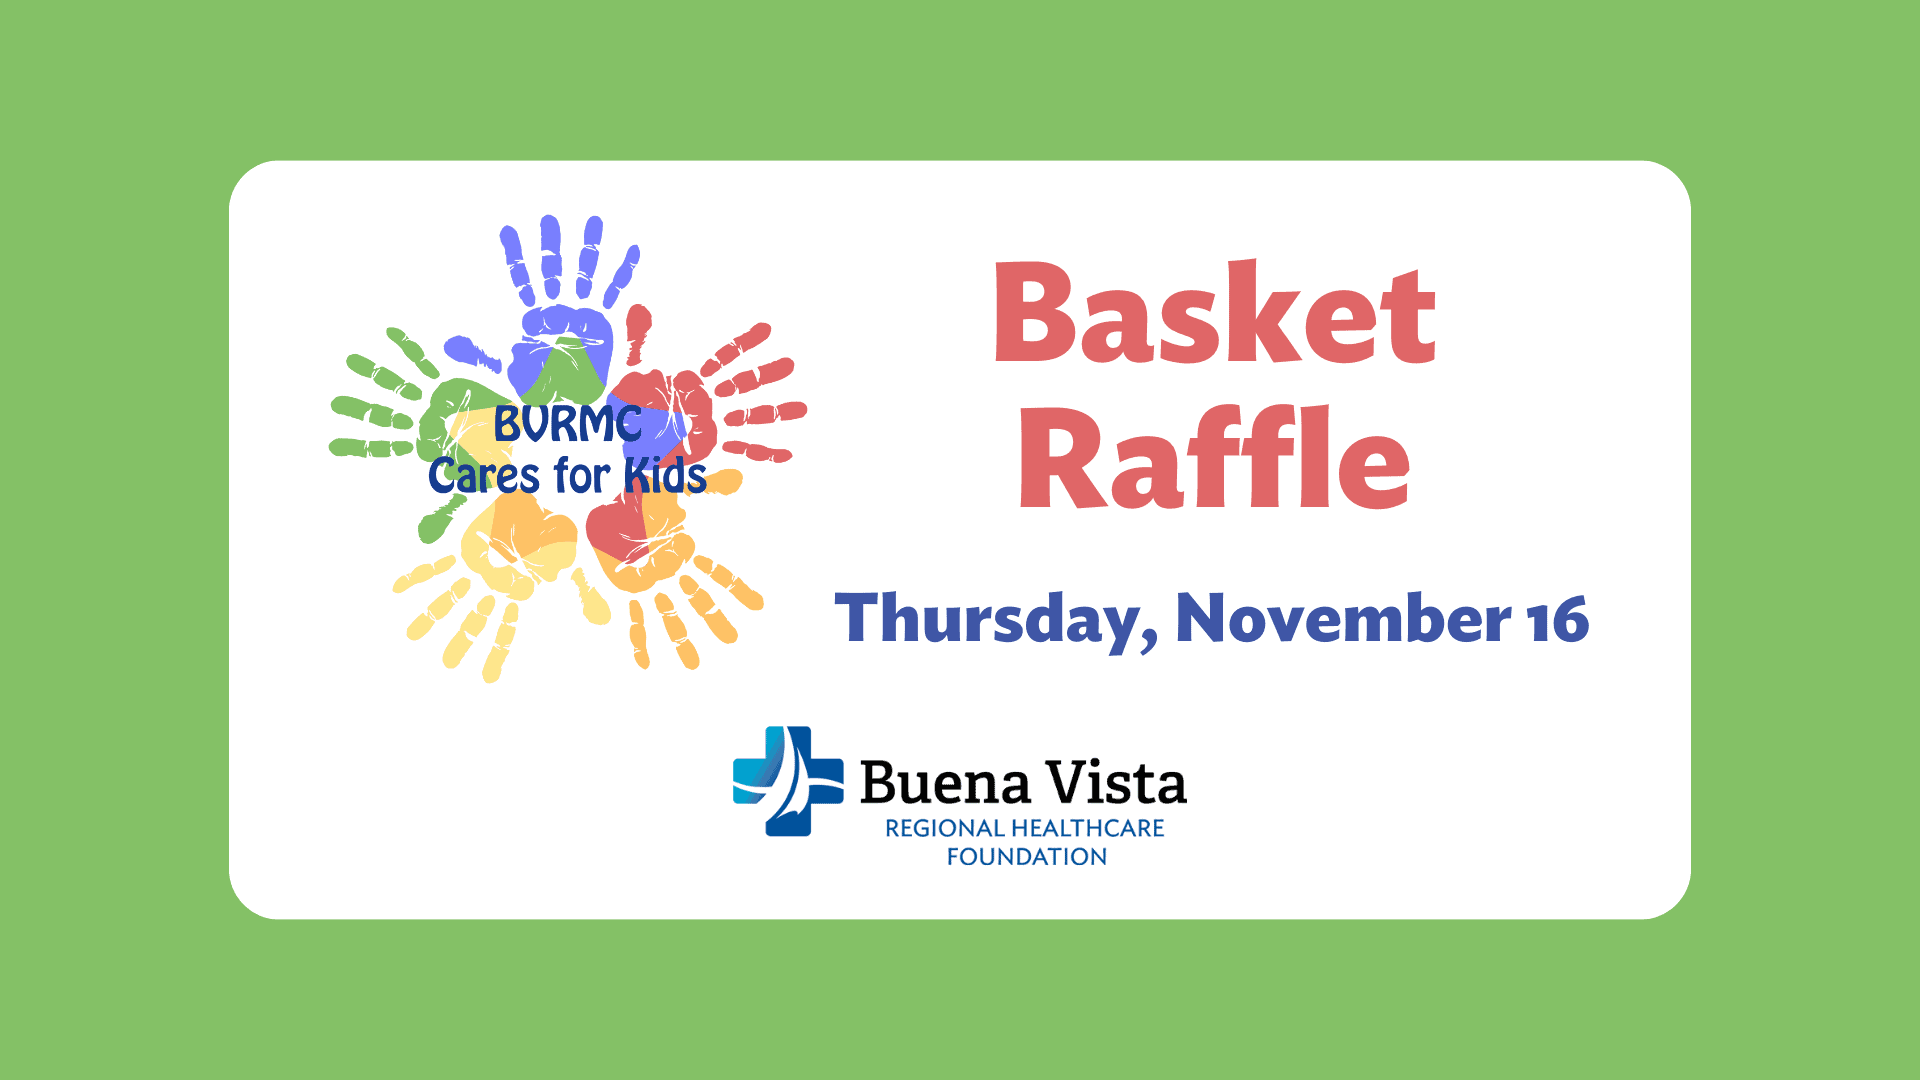 BVRMC Cares for Kids Basket Raffle, Thursday, November 16 graphic